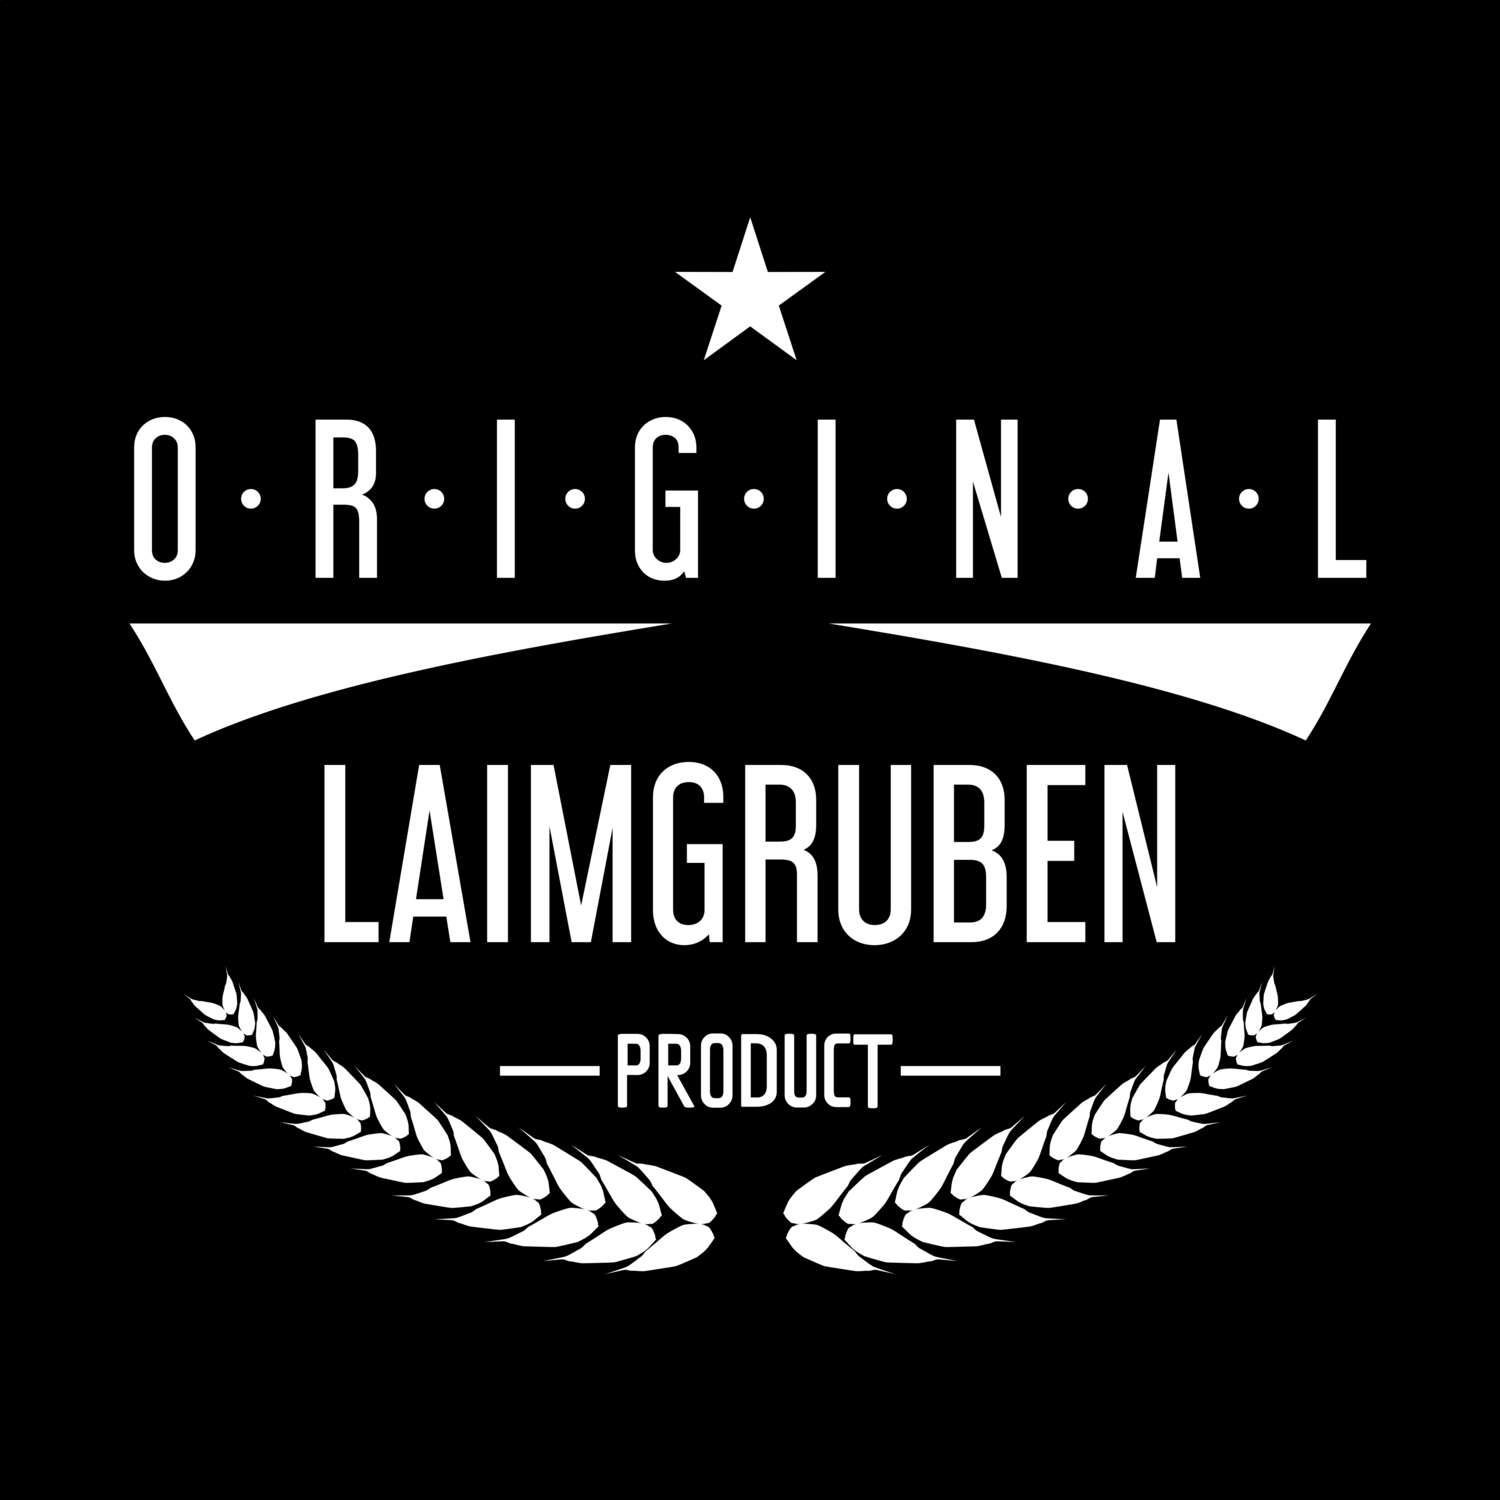 Laimgruben T-Shirt »Original Product«